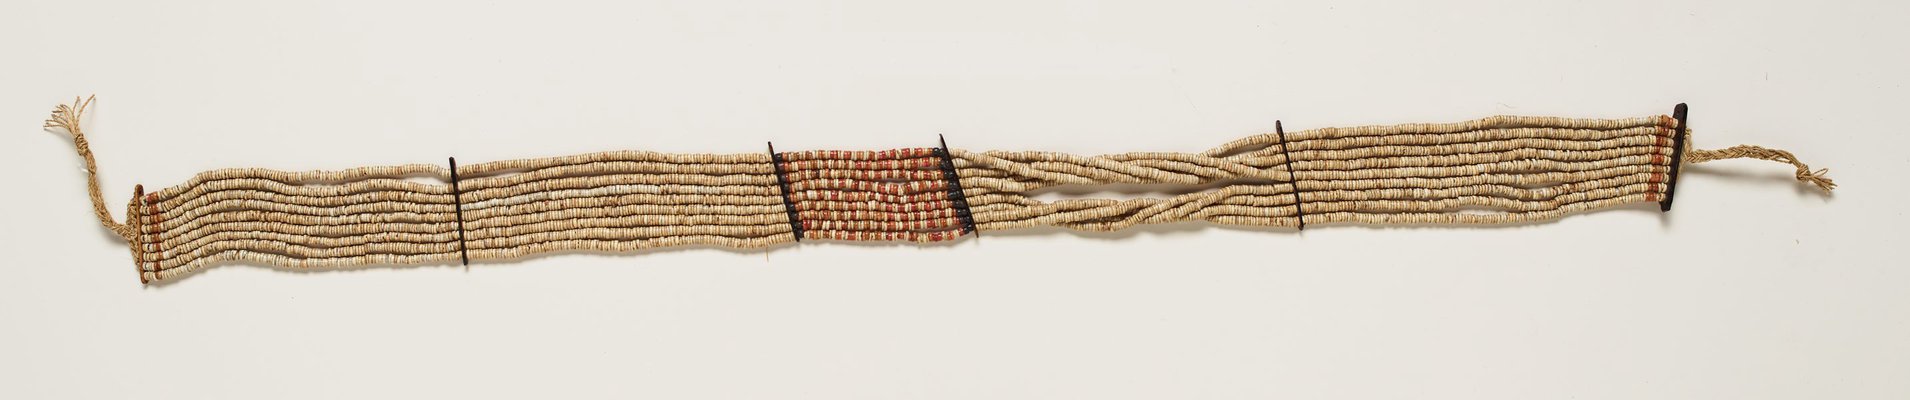 Alternate image of Fo'o'aba (belt) by Langalanga people